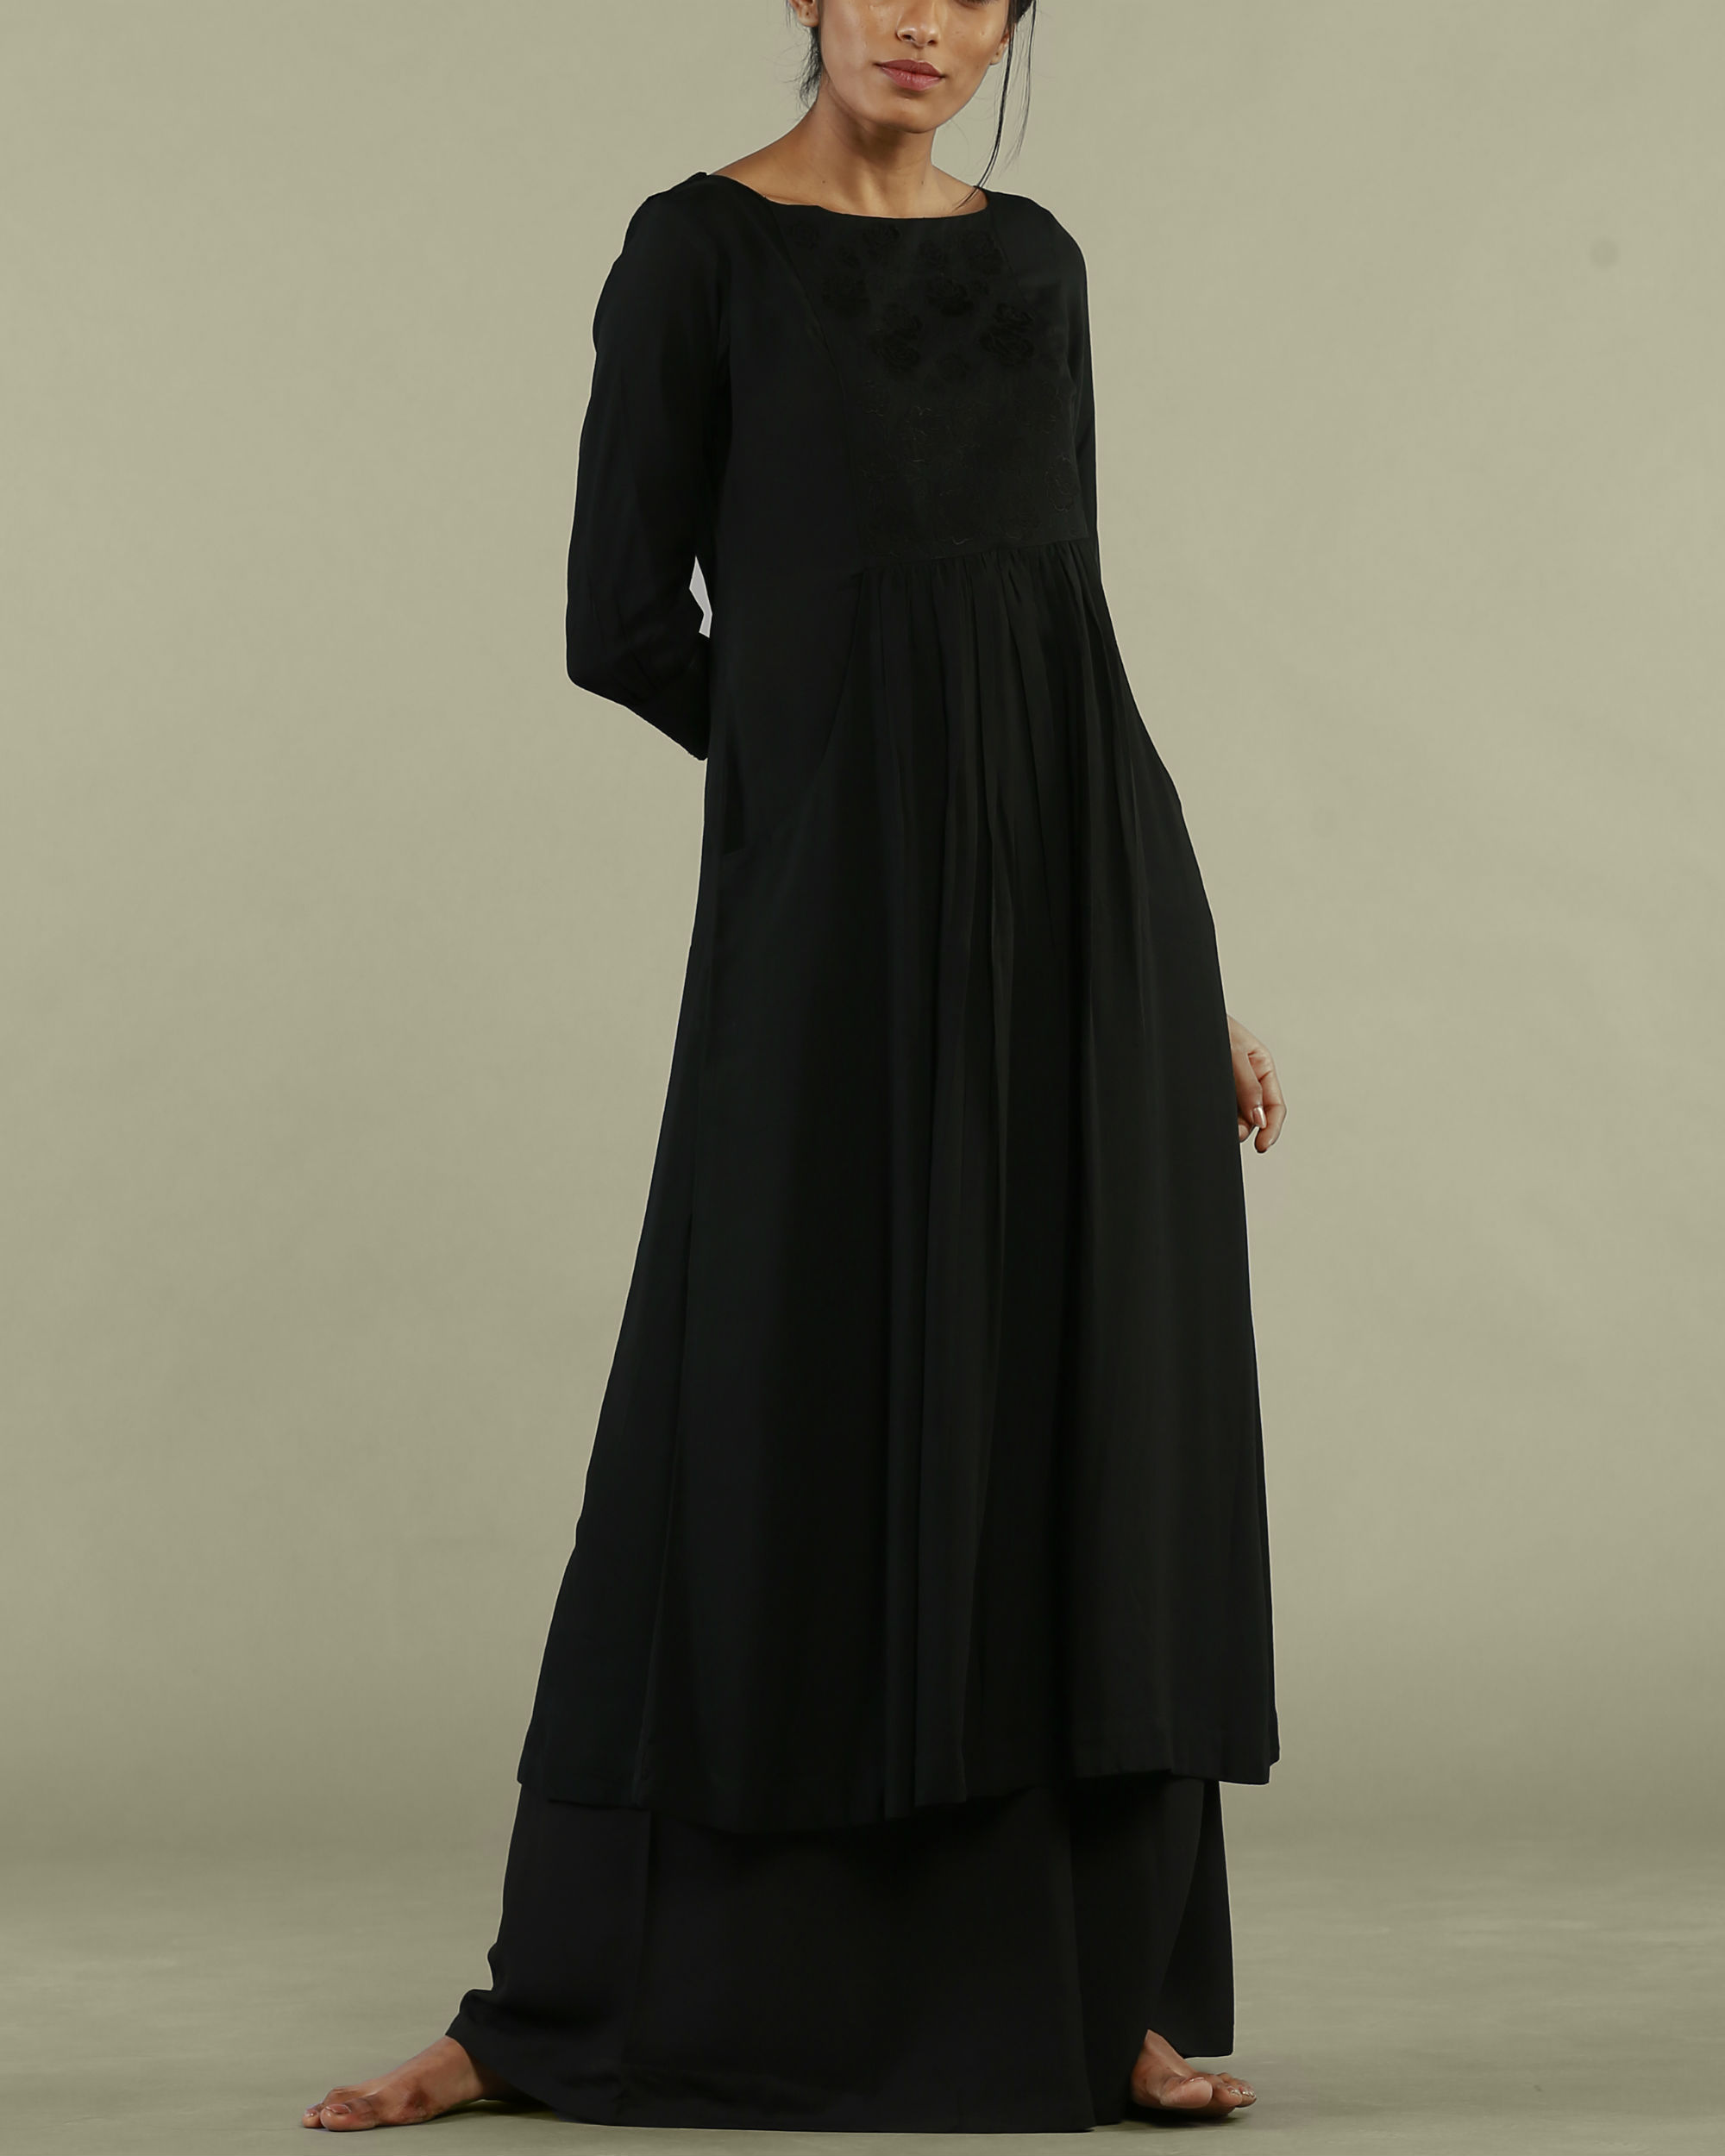 Black dress style tunic by Mantra | The Secret Label